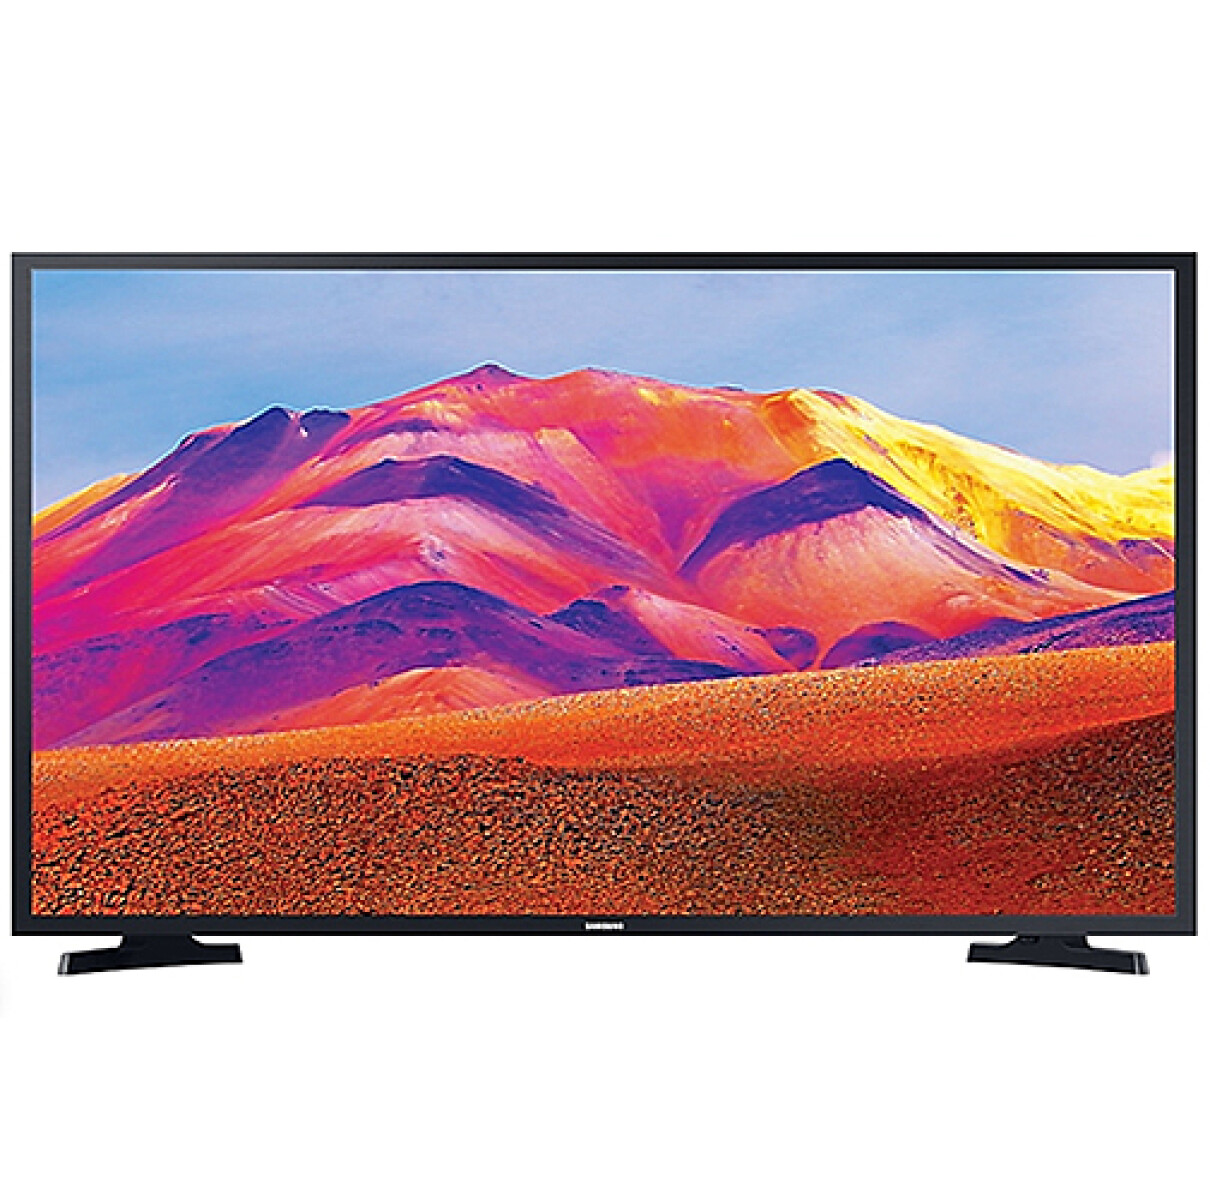 TV SAMSUNG 43 UN43T5300 SMART Full HD - Sin color 